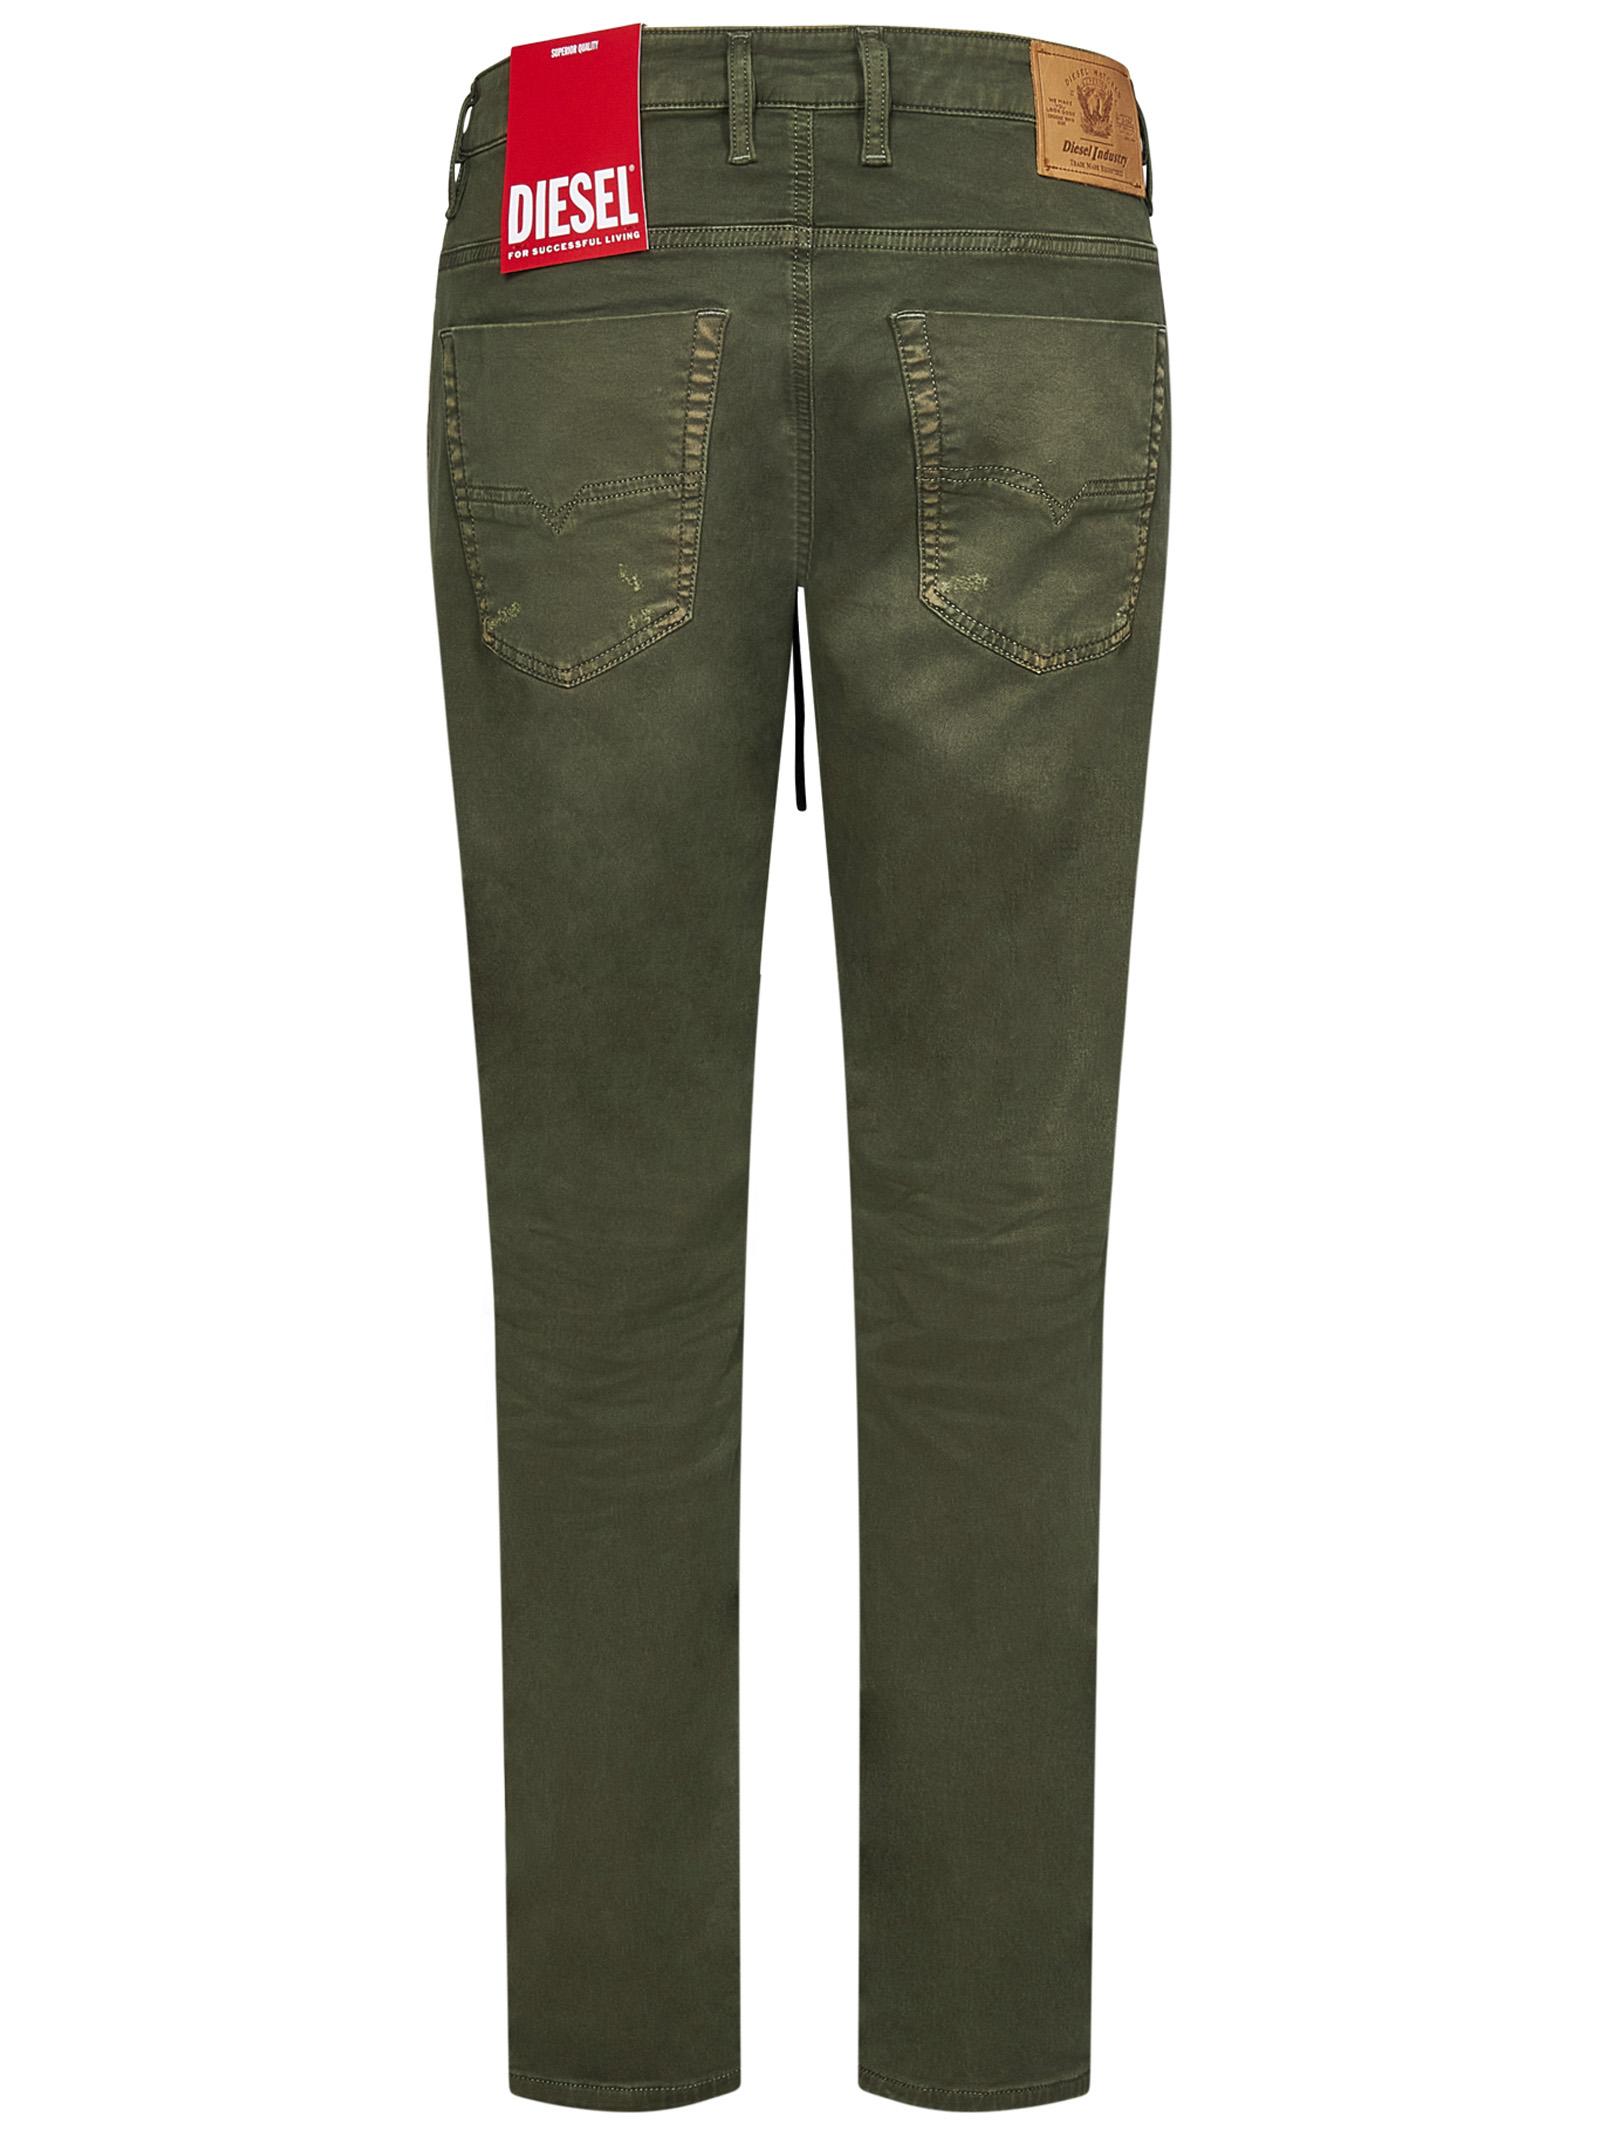 DIESEL Krooley joggjeans® 09e98 Tapered Jeans in Green for Men | Lyst